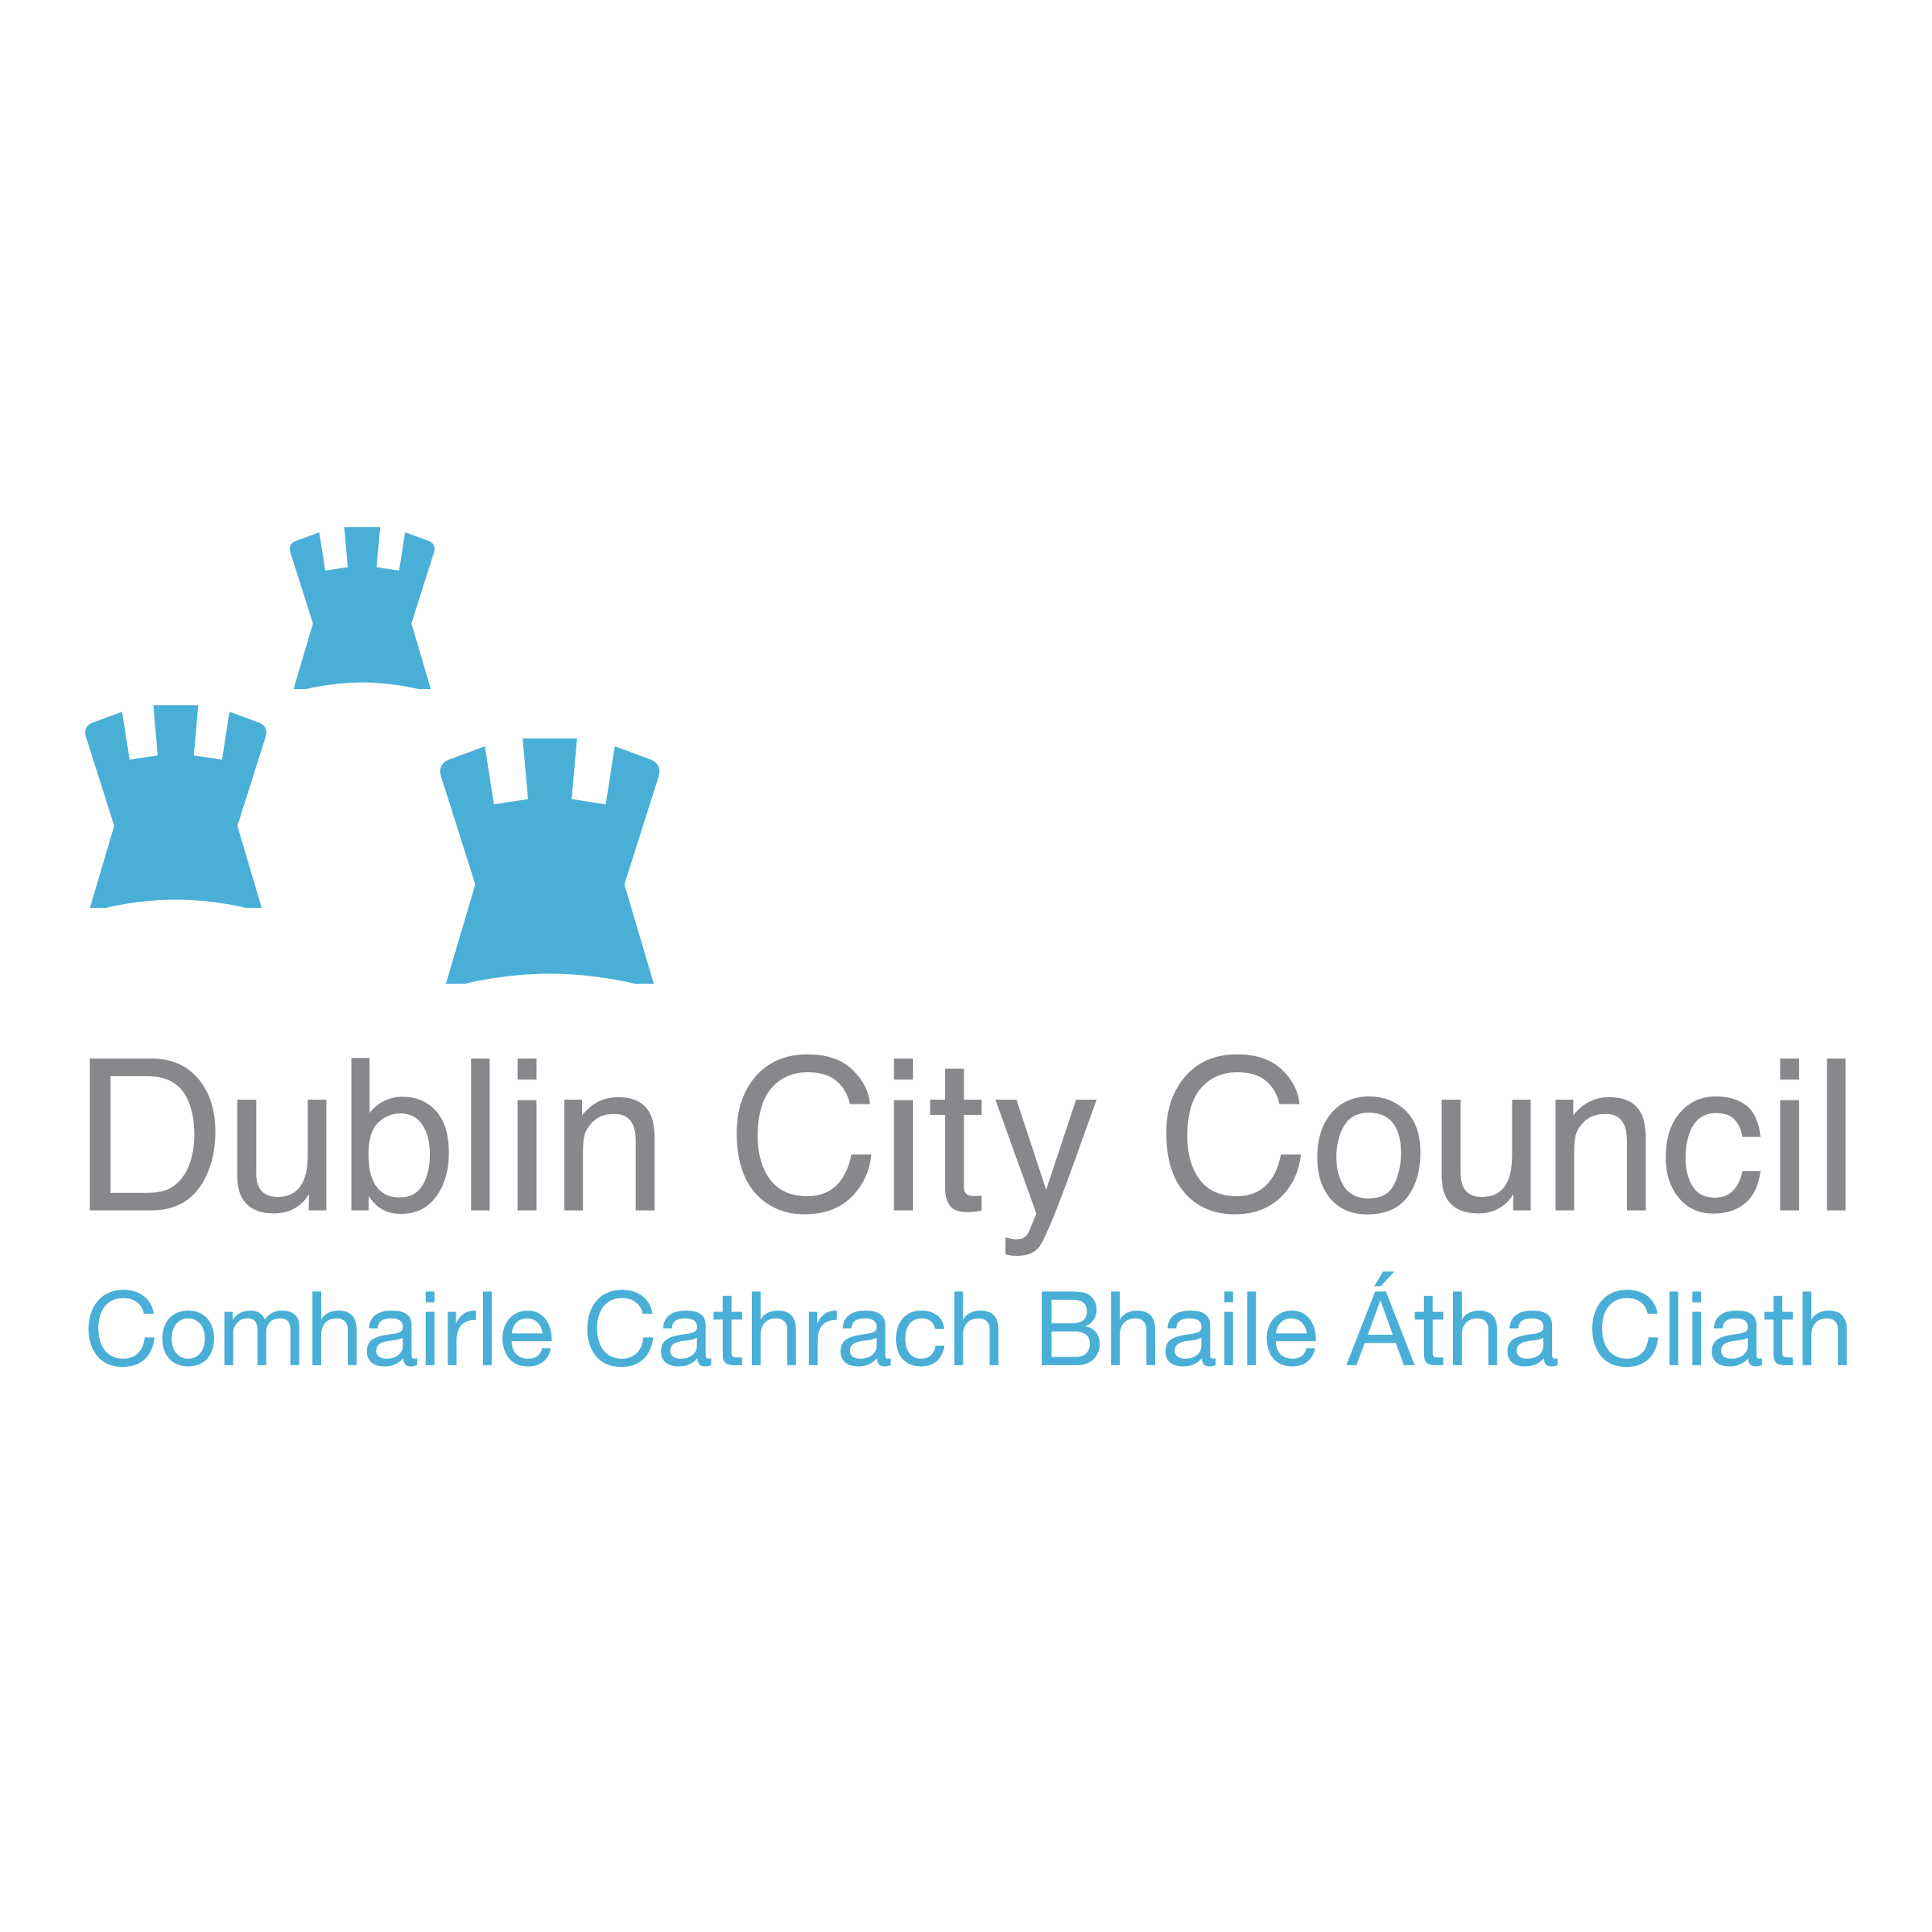 dublin city council logo.png